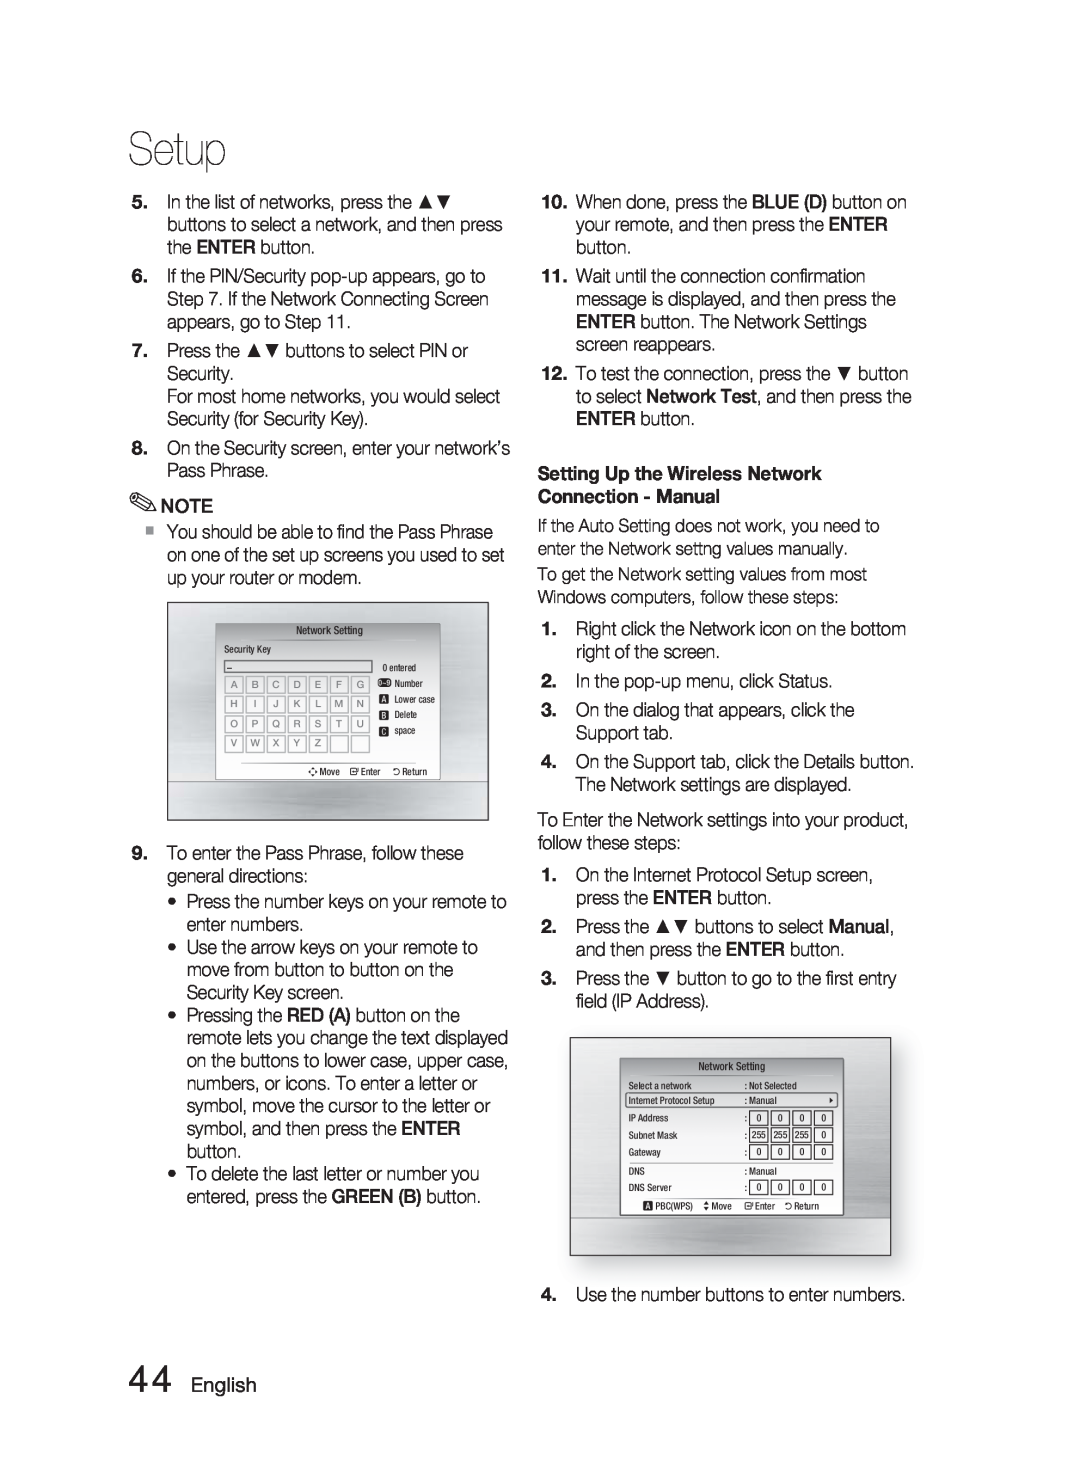 Samsung AH68-02279Y user manual English, Setup 